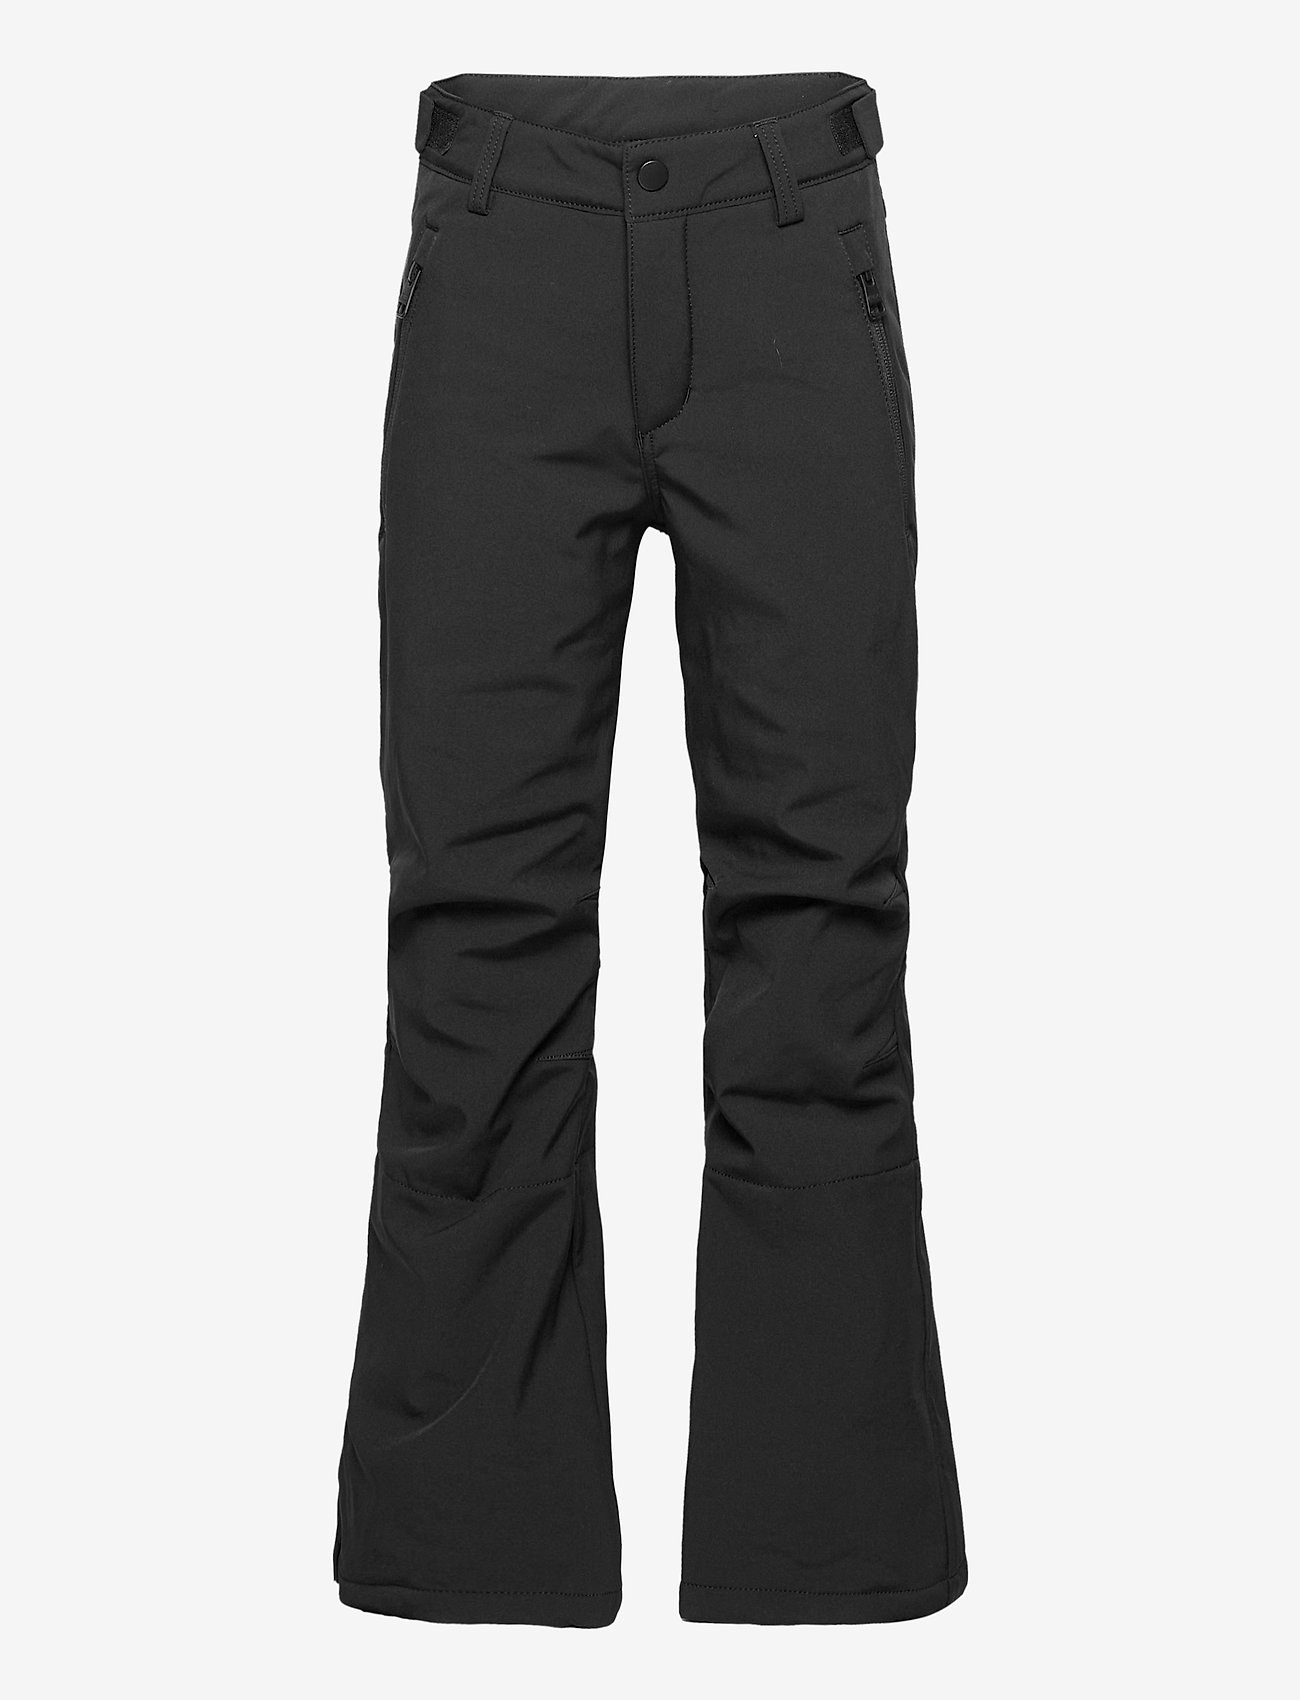 Reima - Softshell pants, Kajana - winter trousers - black - 0